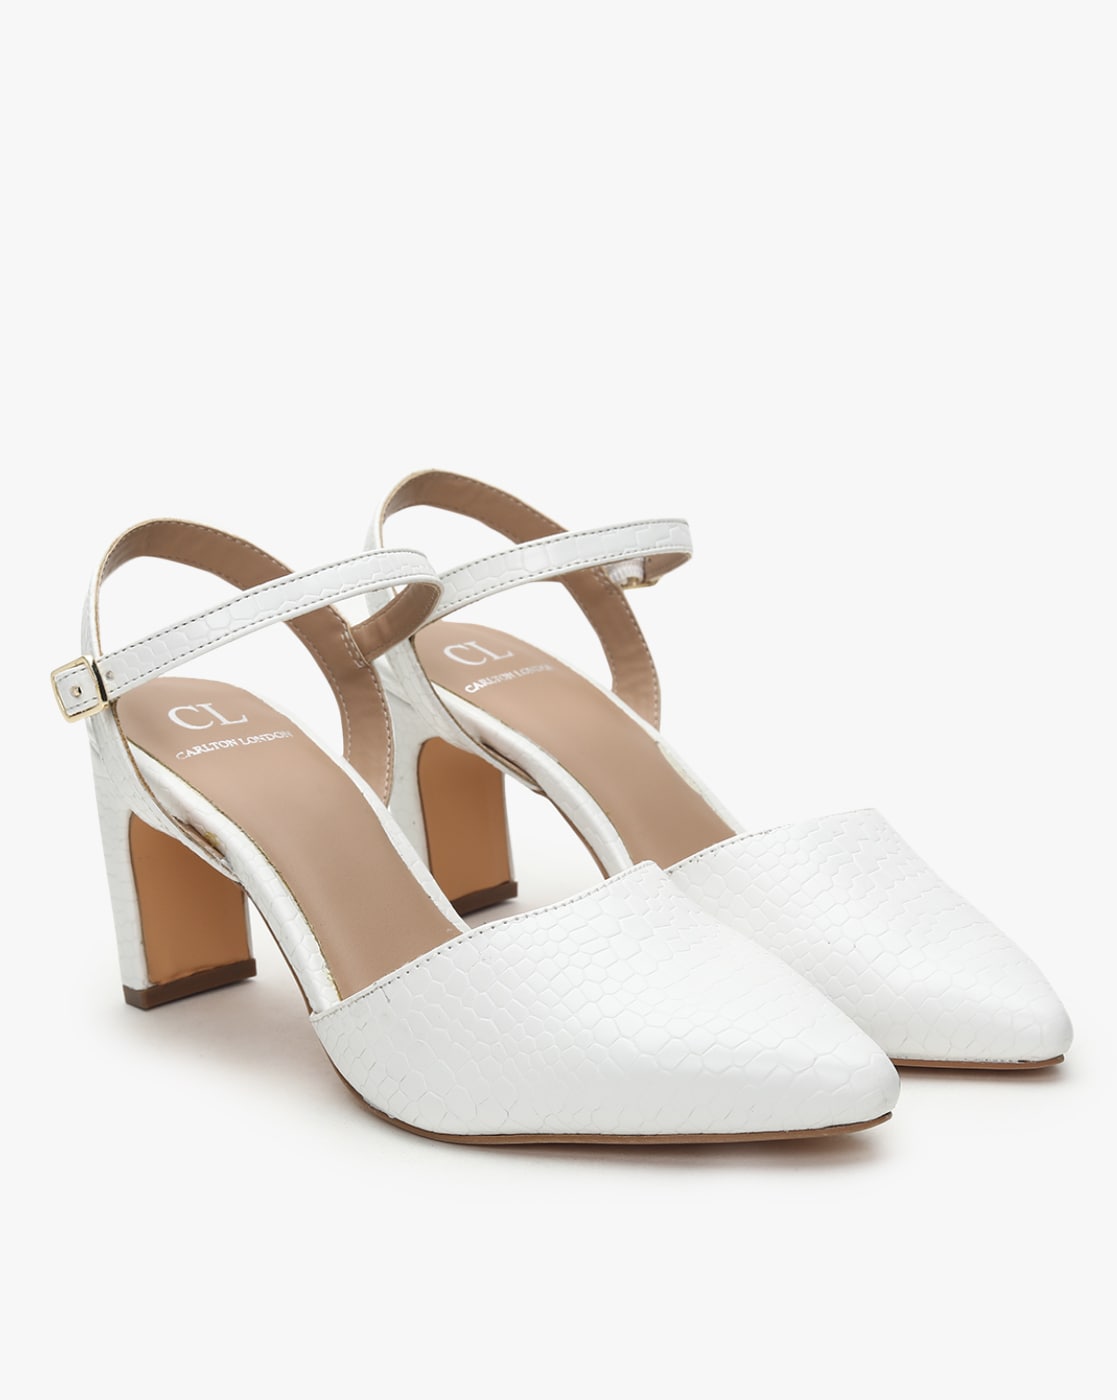 Carelinah White Leather Block Heel Sandal